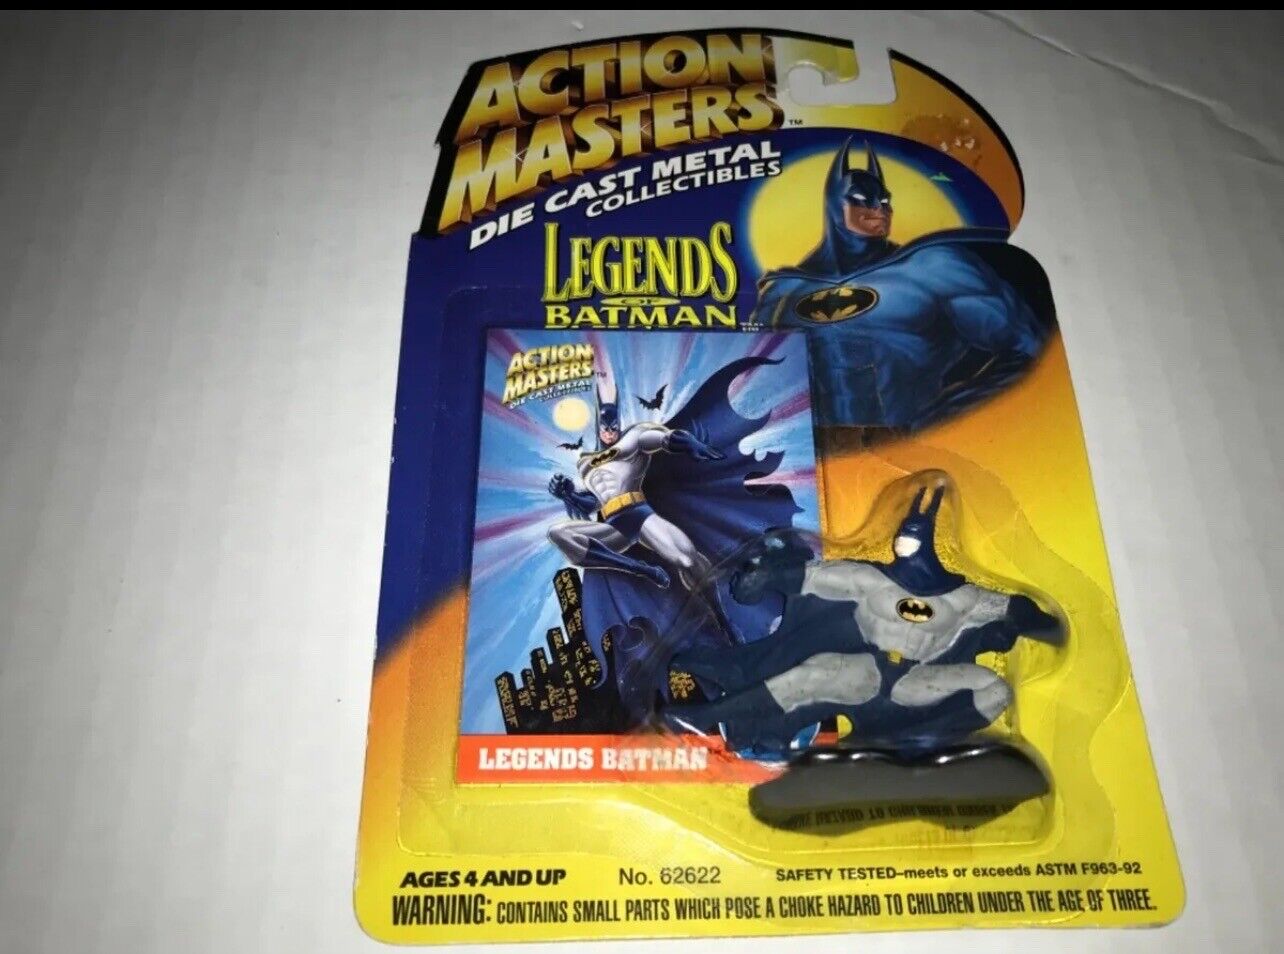 Batman Action Masters Die Cast Metal Legends of Batman, 1994 Kenner Batman NIP